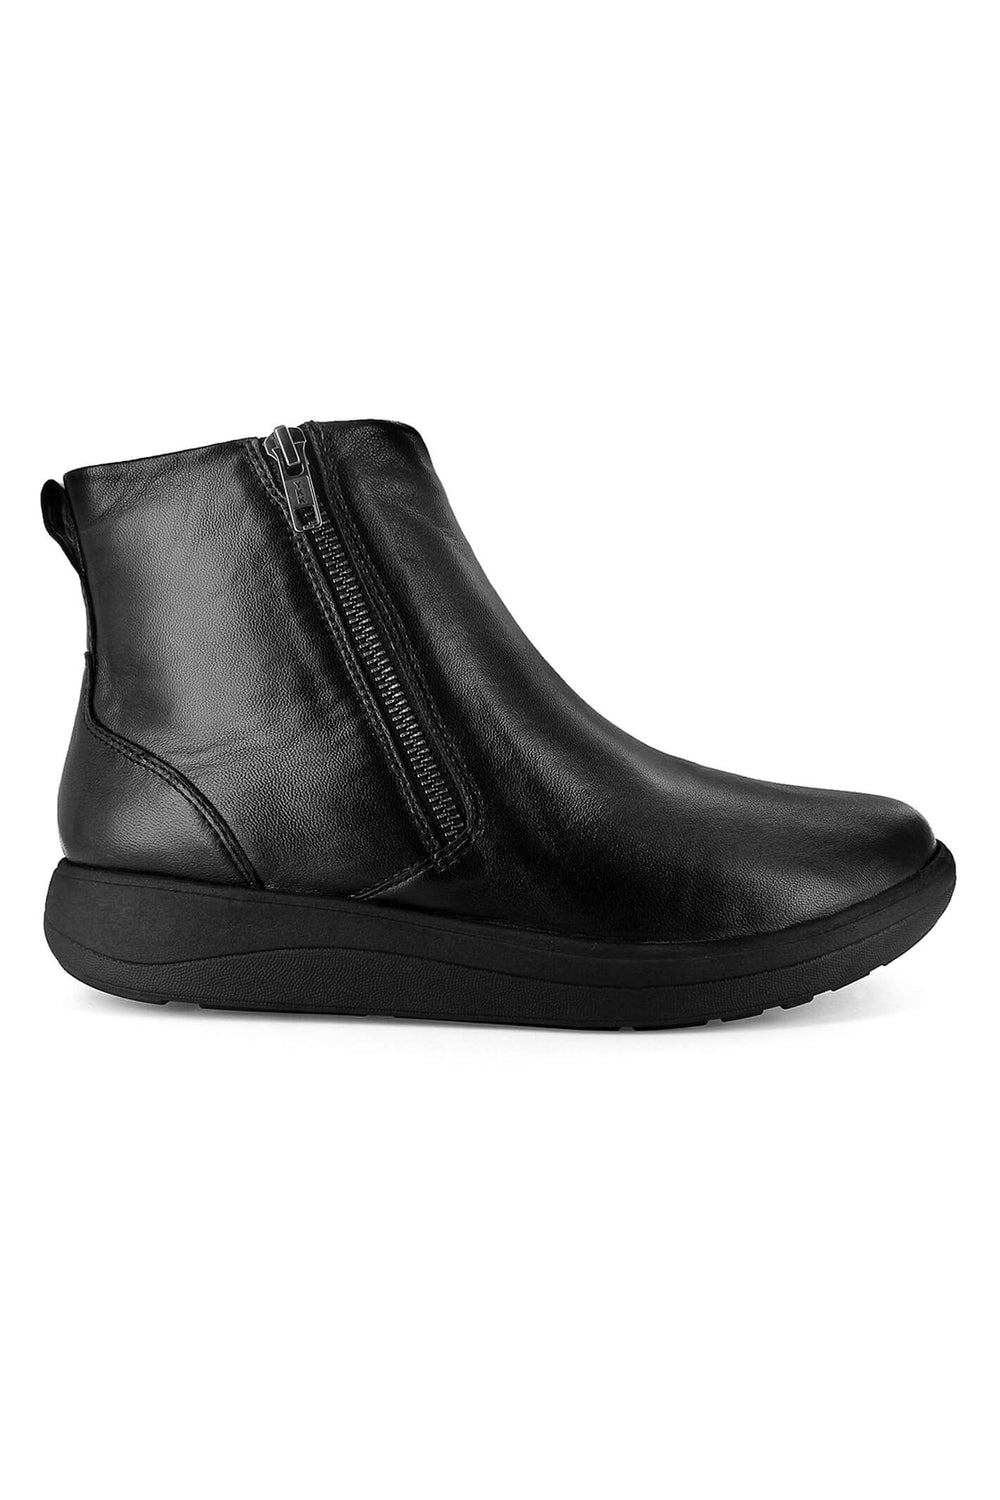 Strive Bamford II Black Zip Up Boots - Shirley Allum Boutique